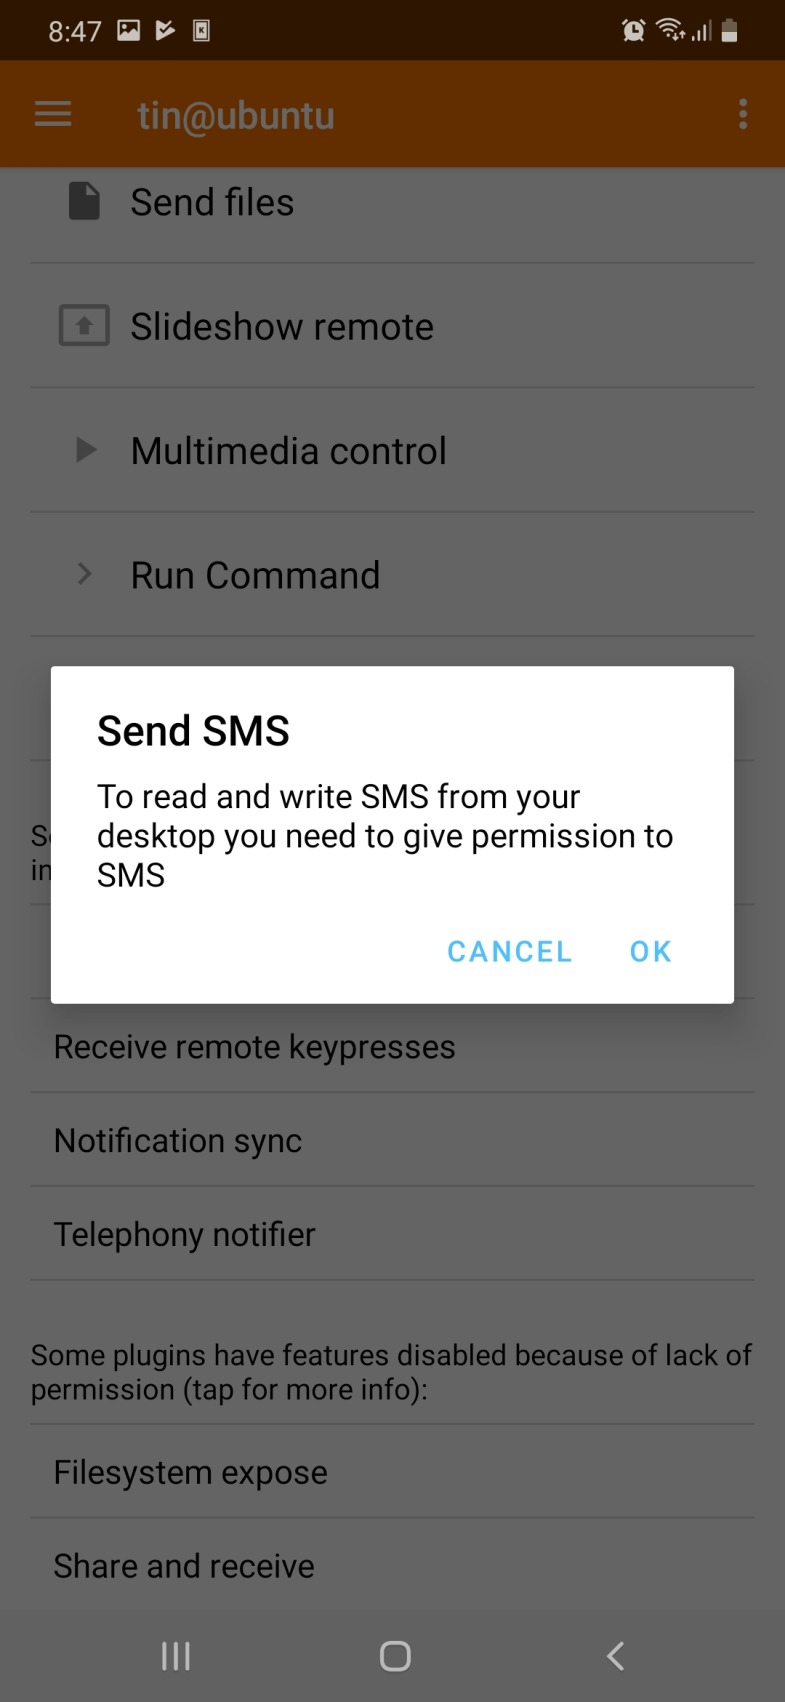 Send SMS option